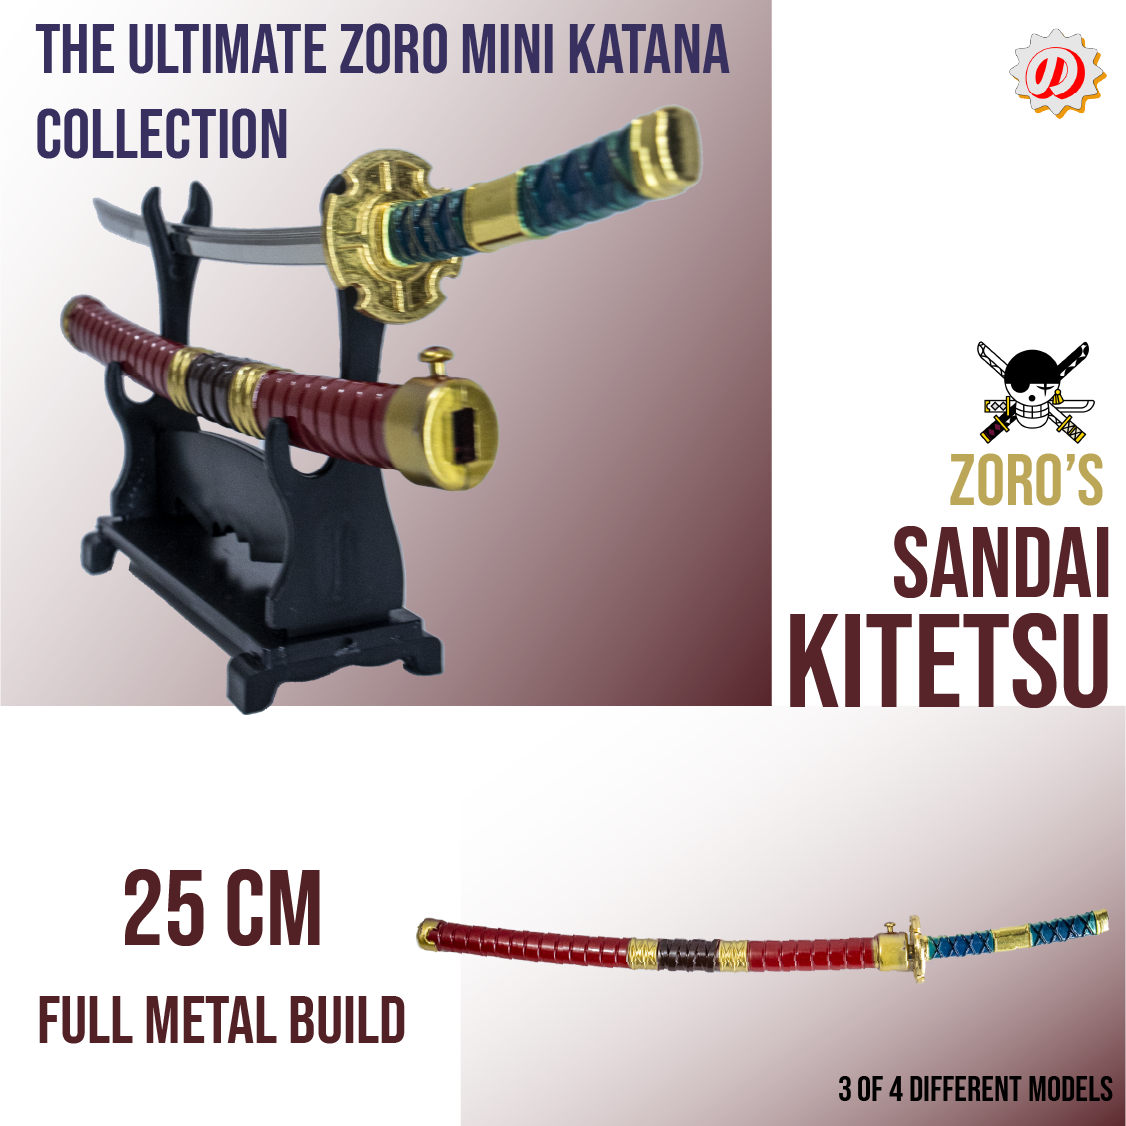 Zoro Sandai Kitetsu 25 cm Metal Katana - all details